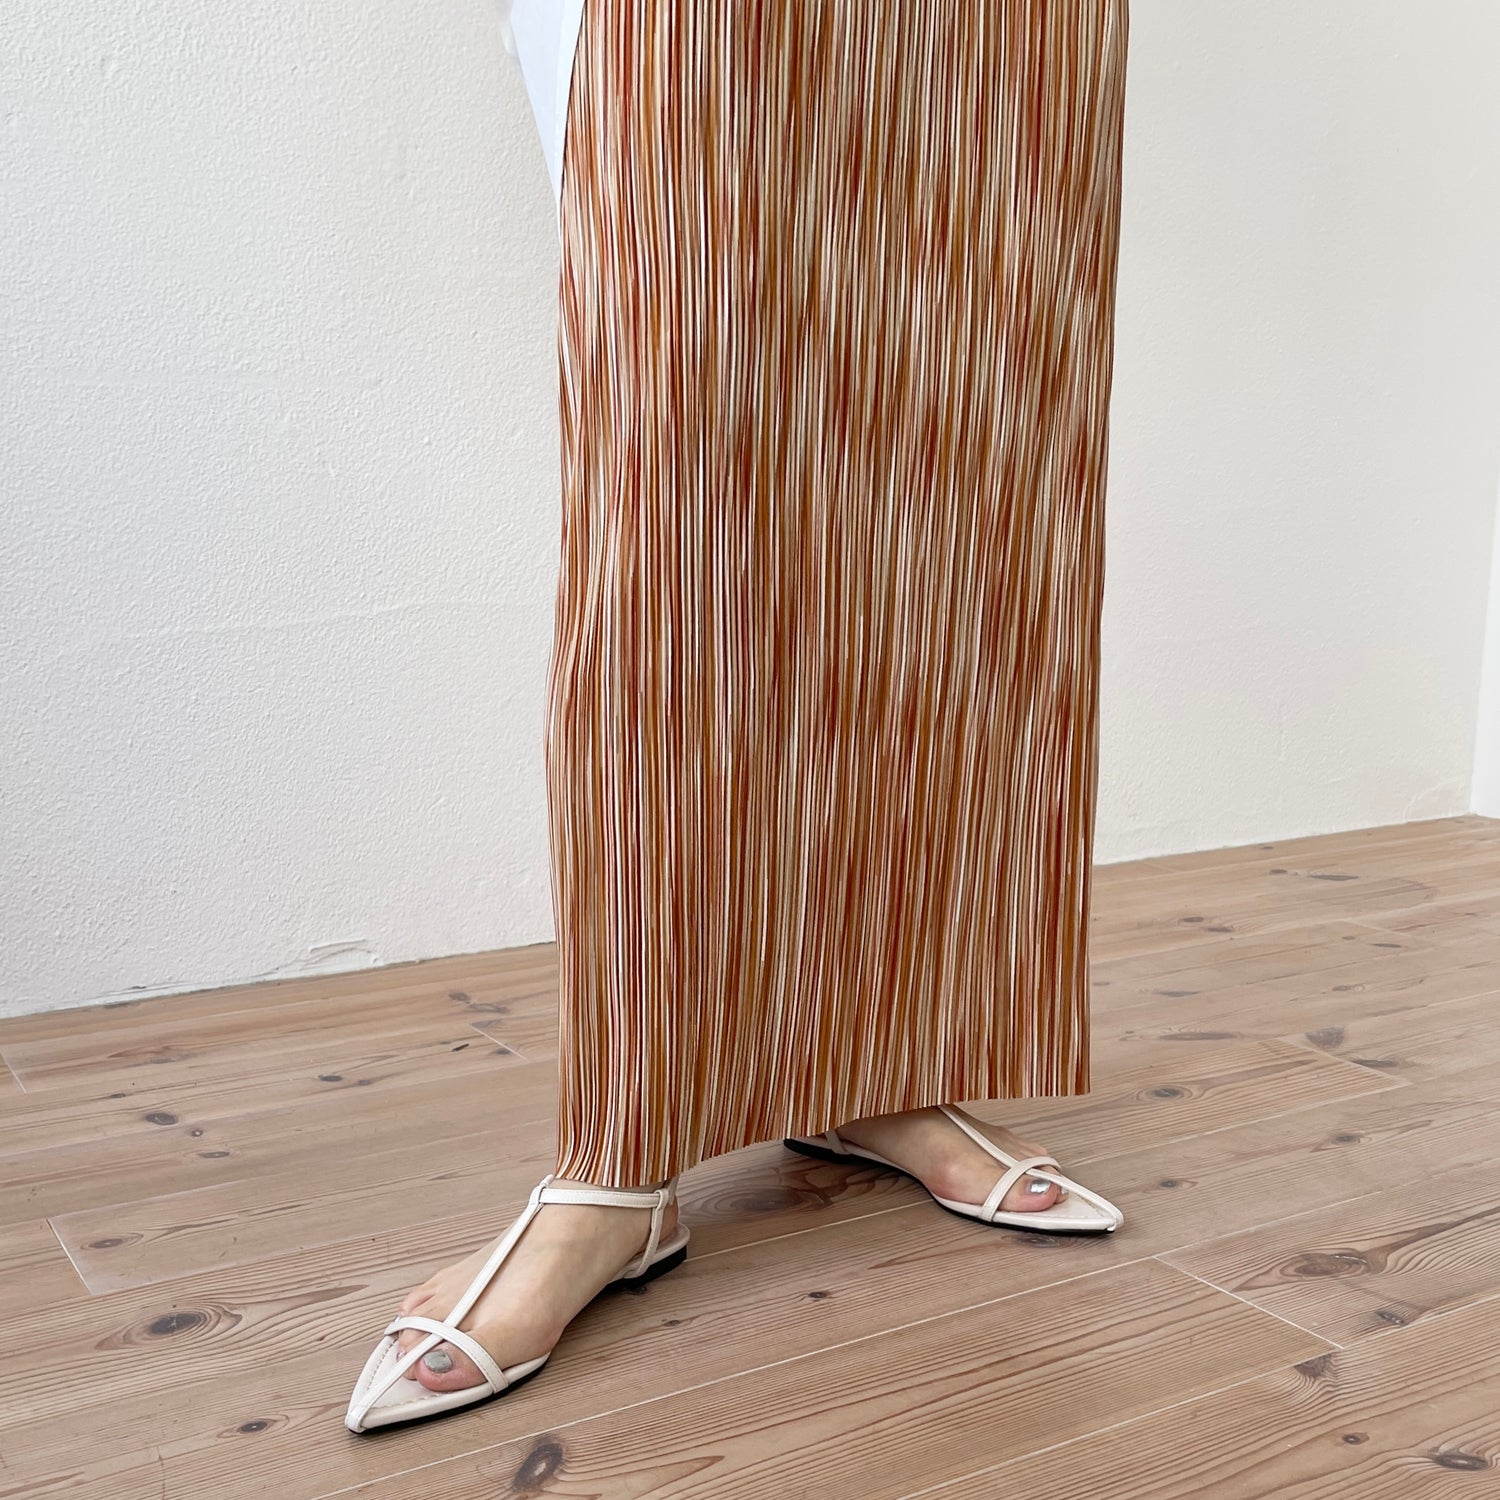 daily daily super stretch pleats skirt / orange